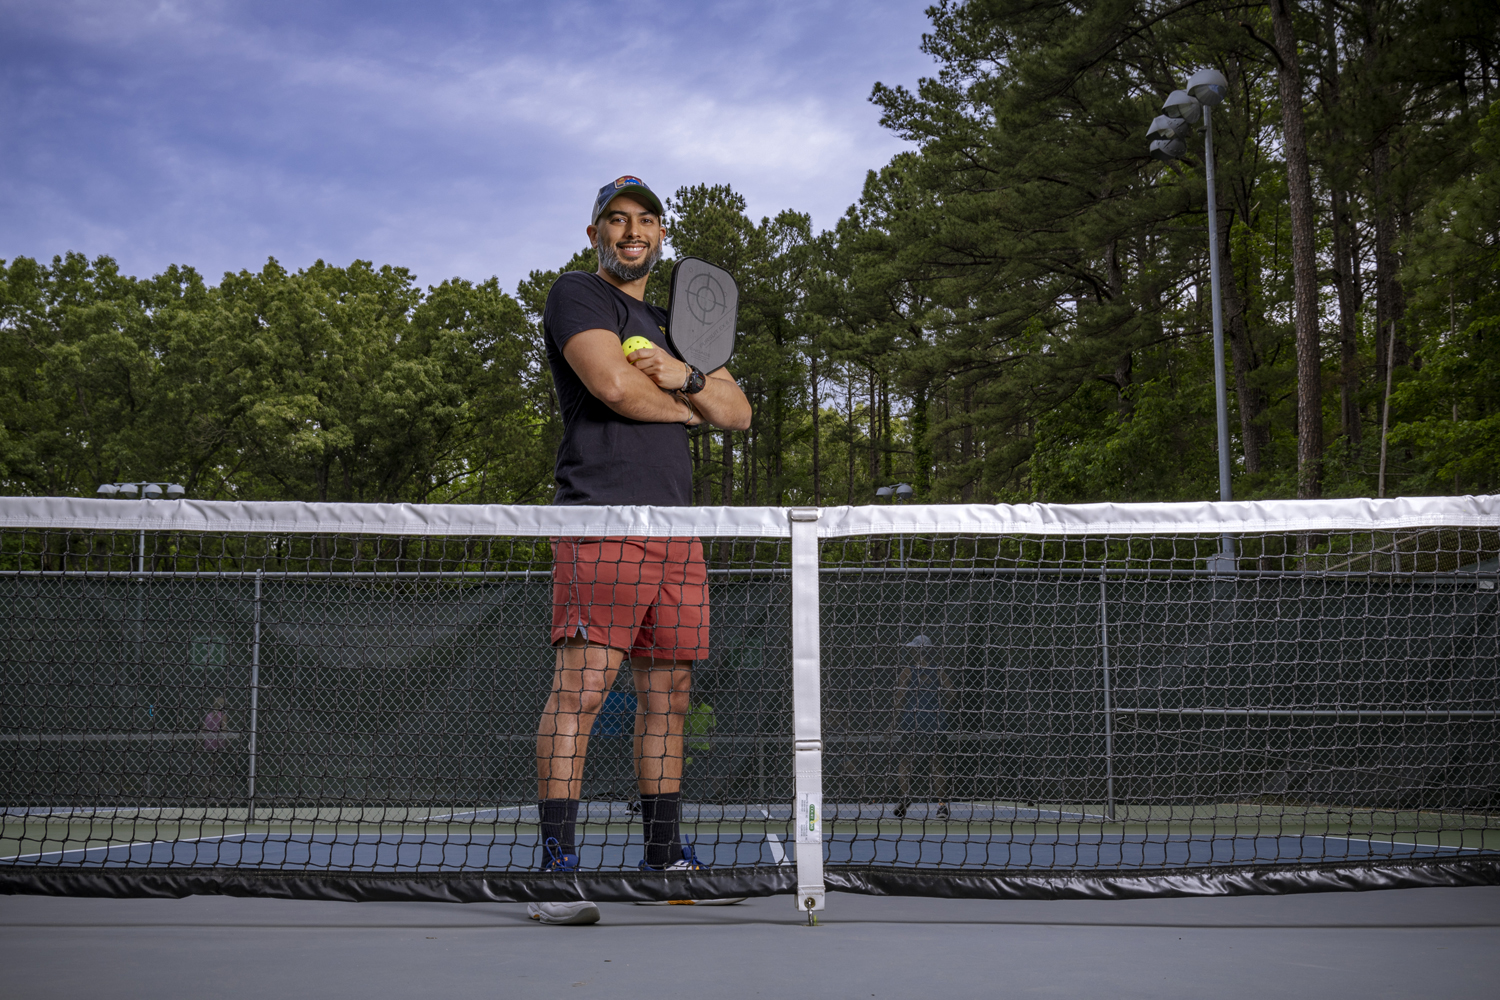 Esteban Agudo poses on a pickleball court